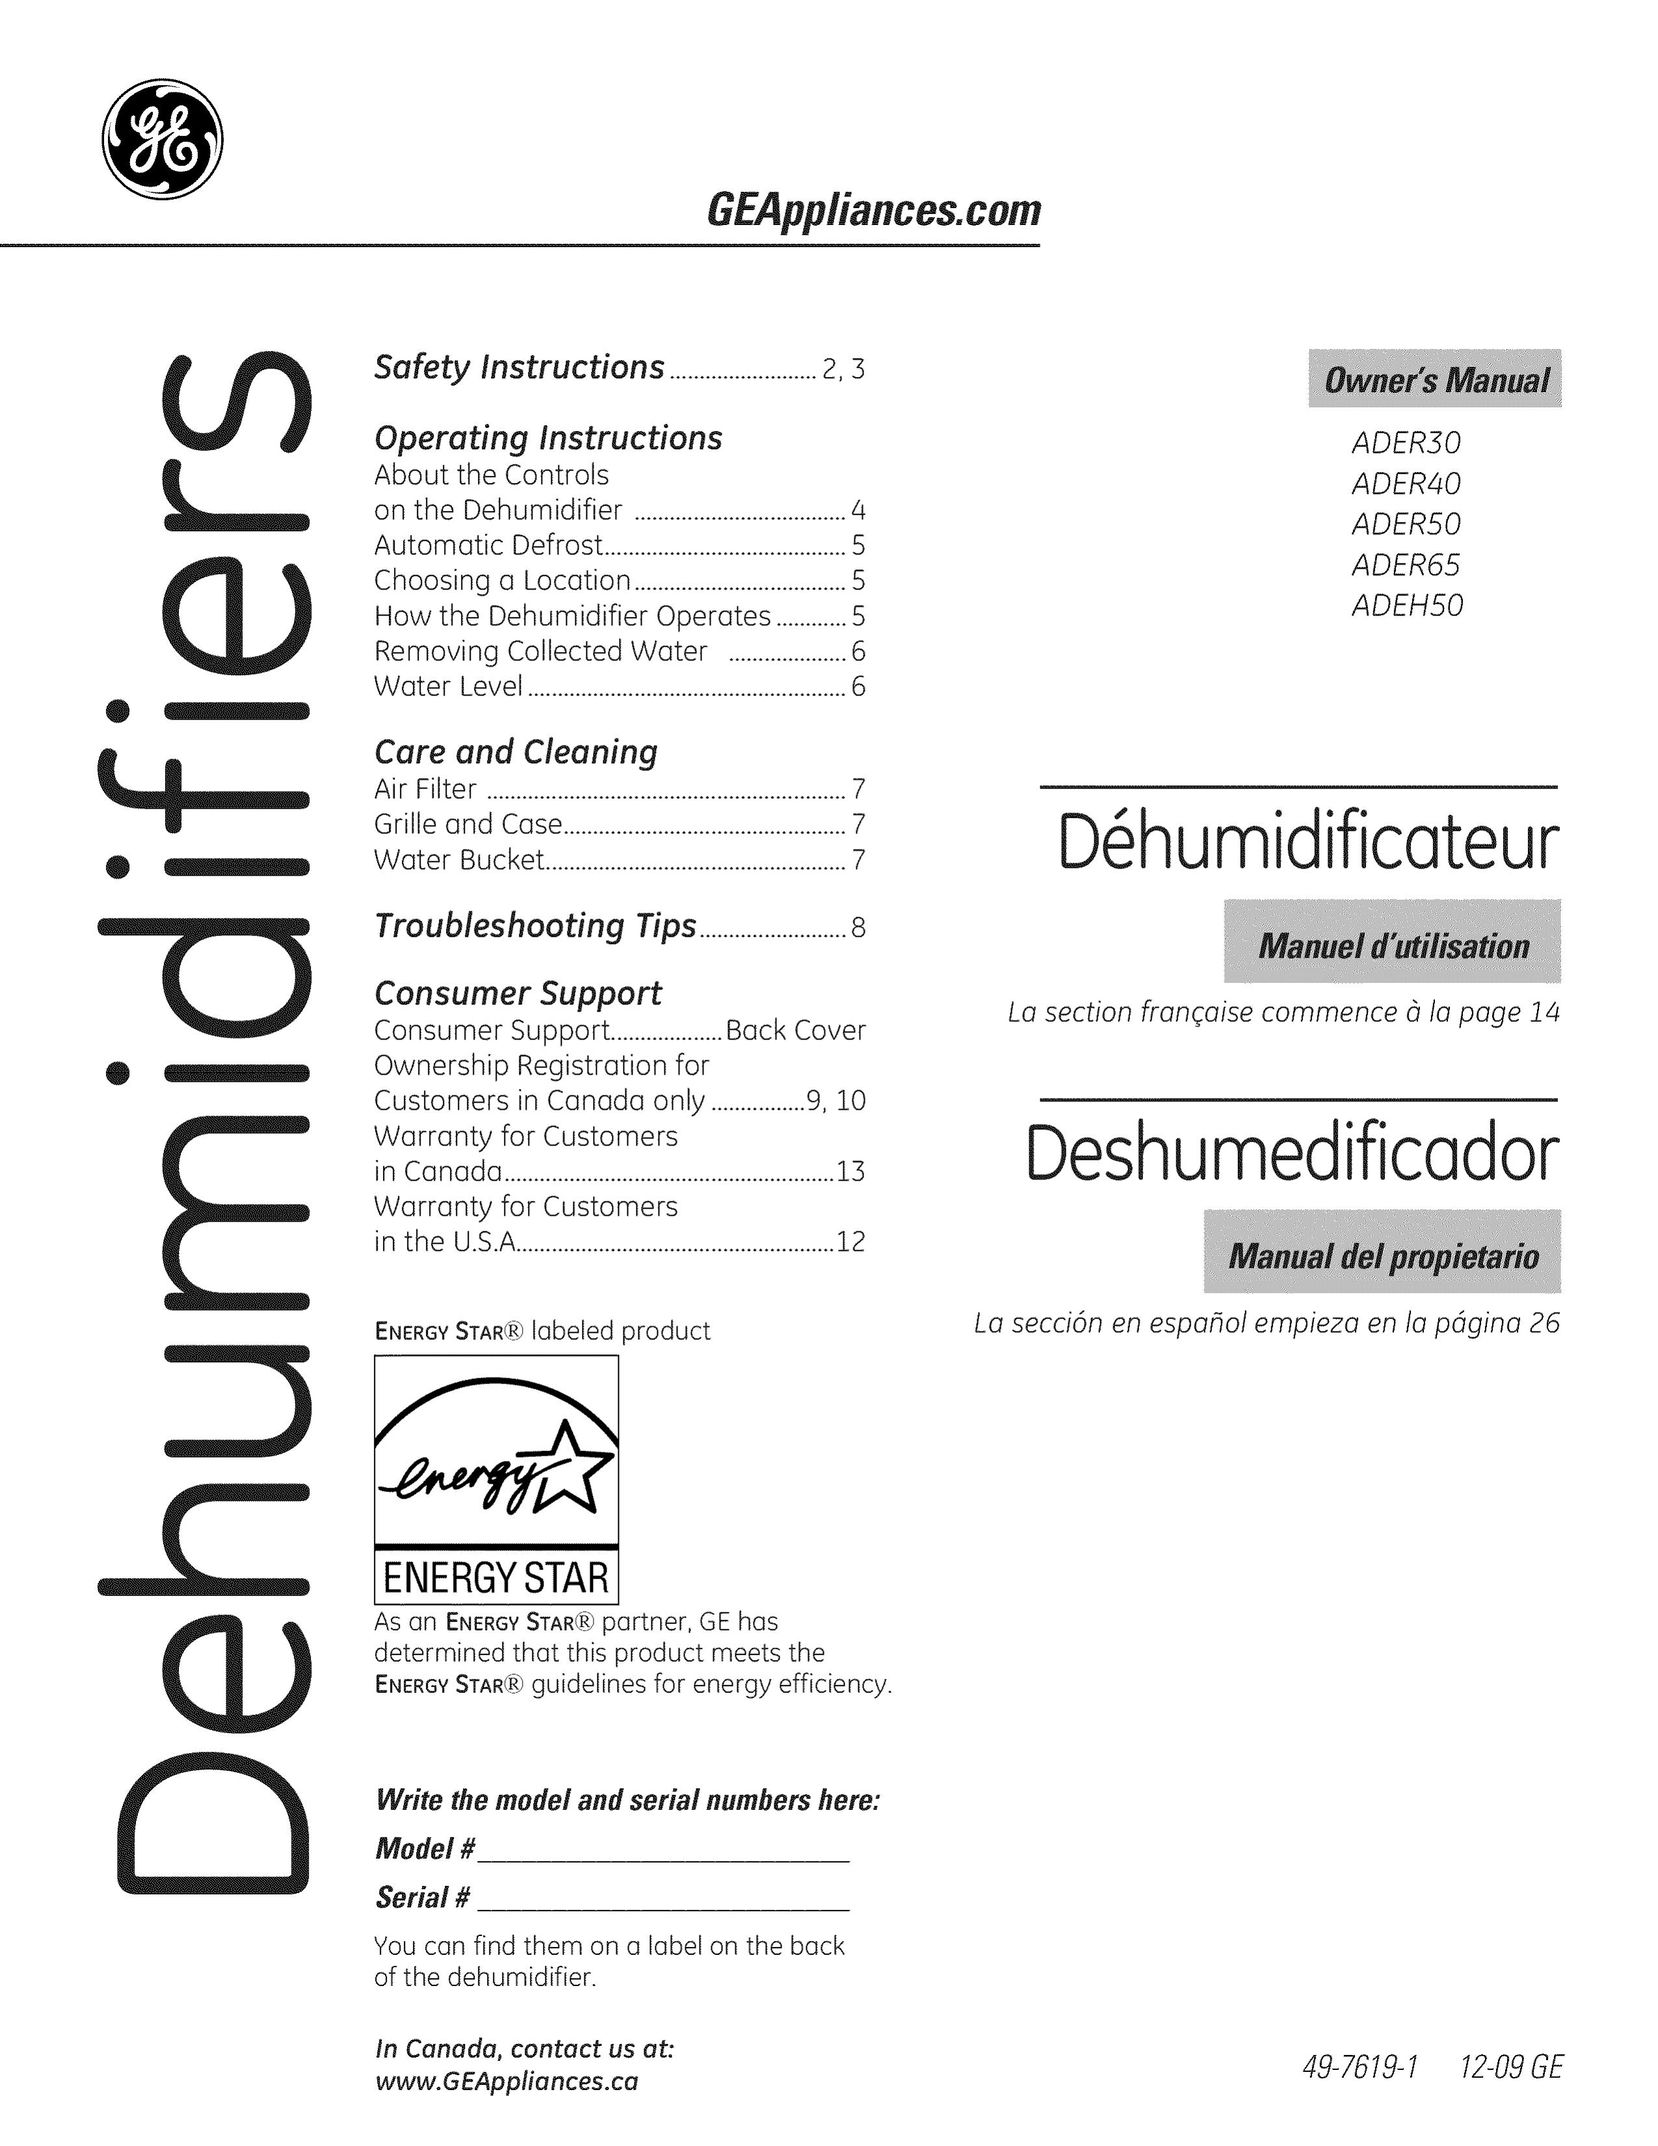 GE ADEHSO Dehumidifier User Manual